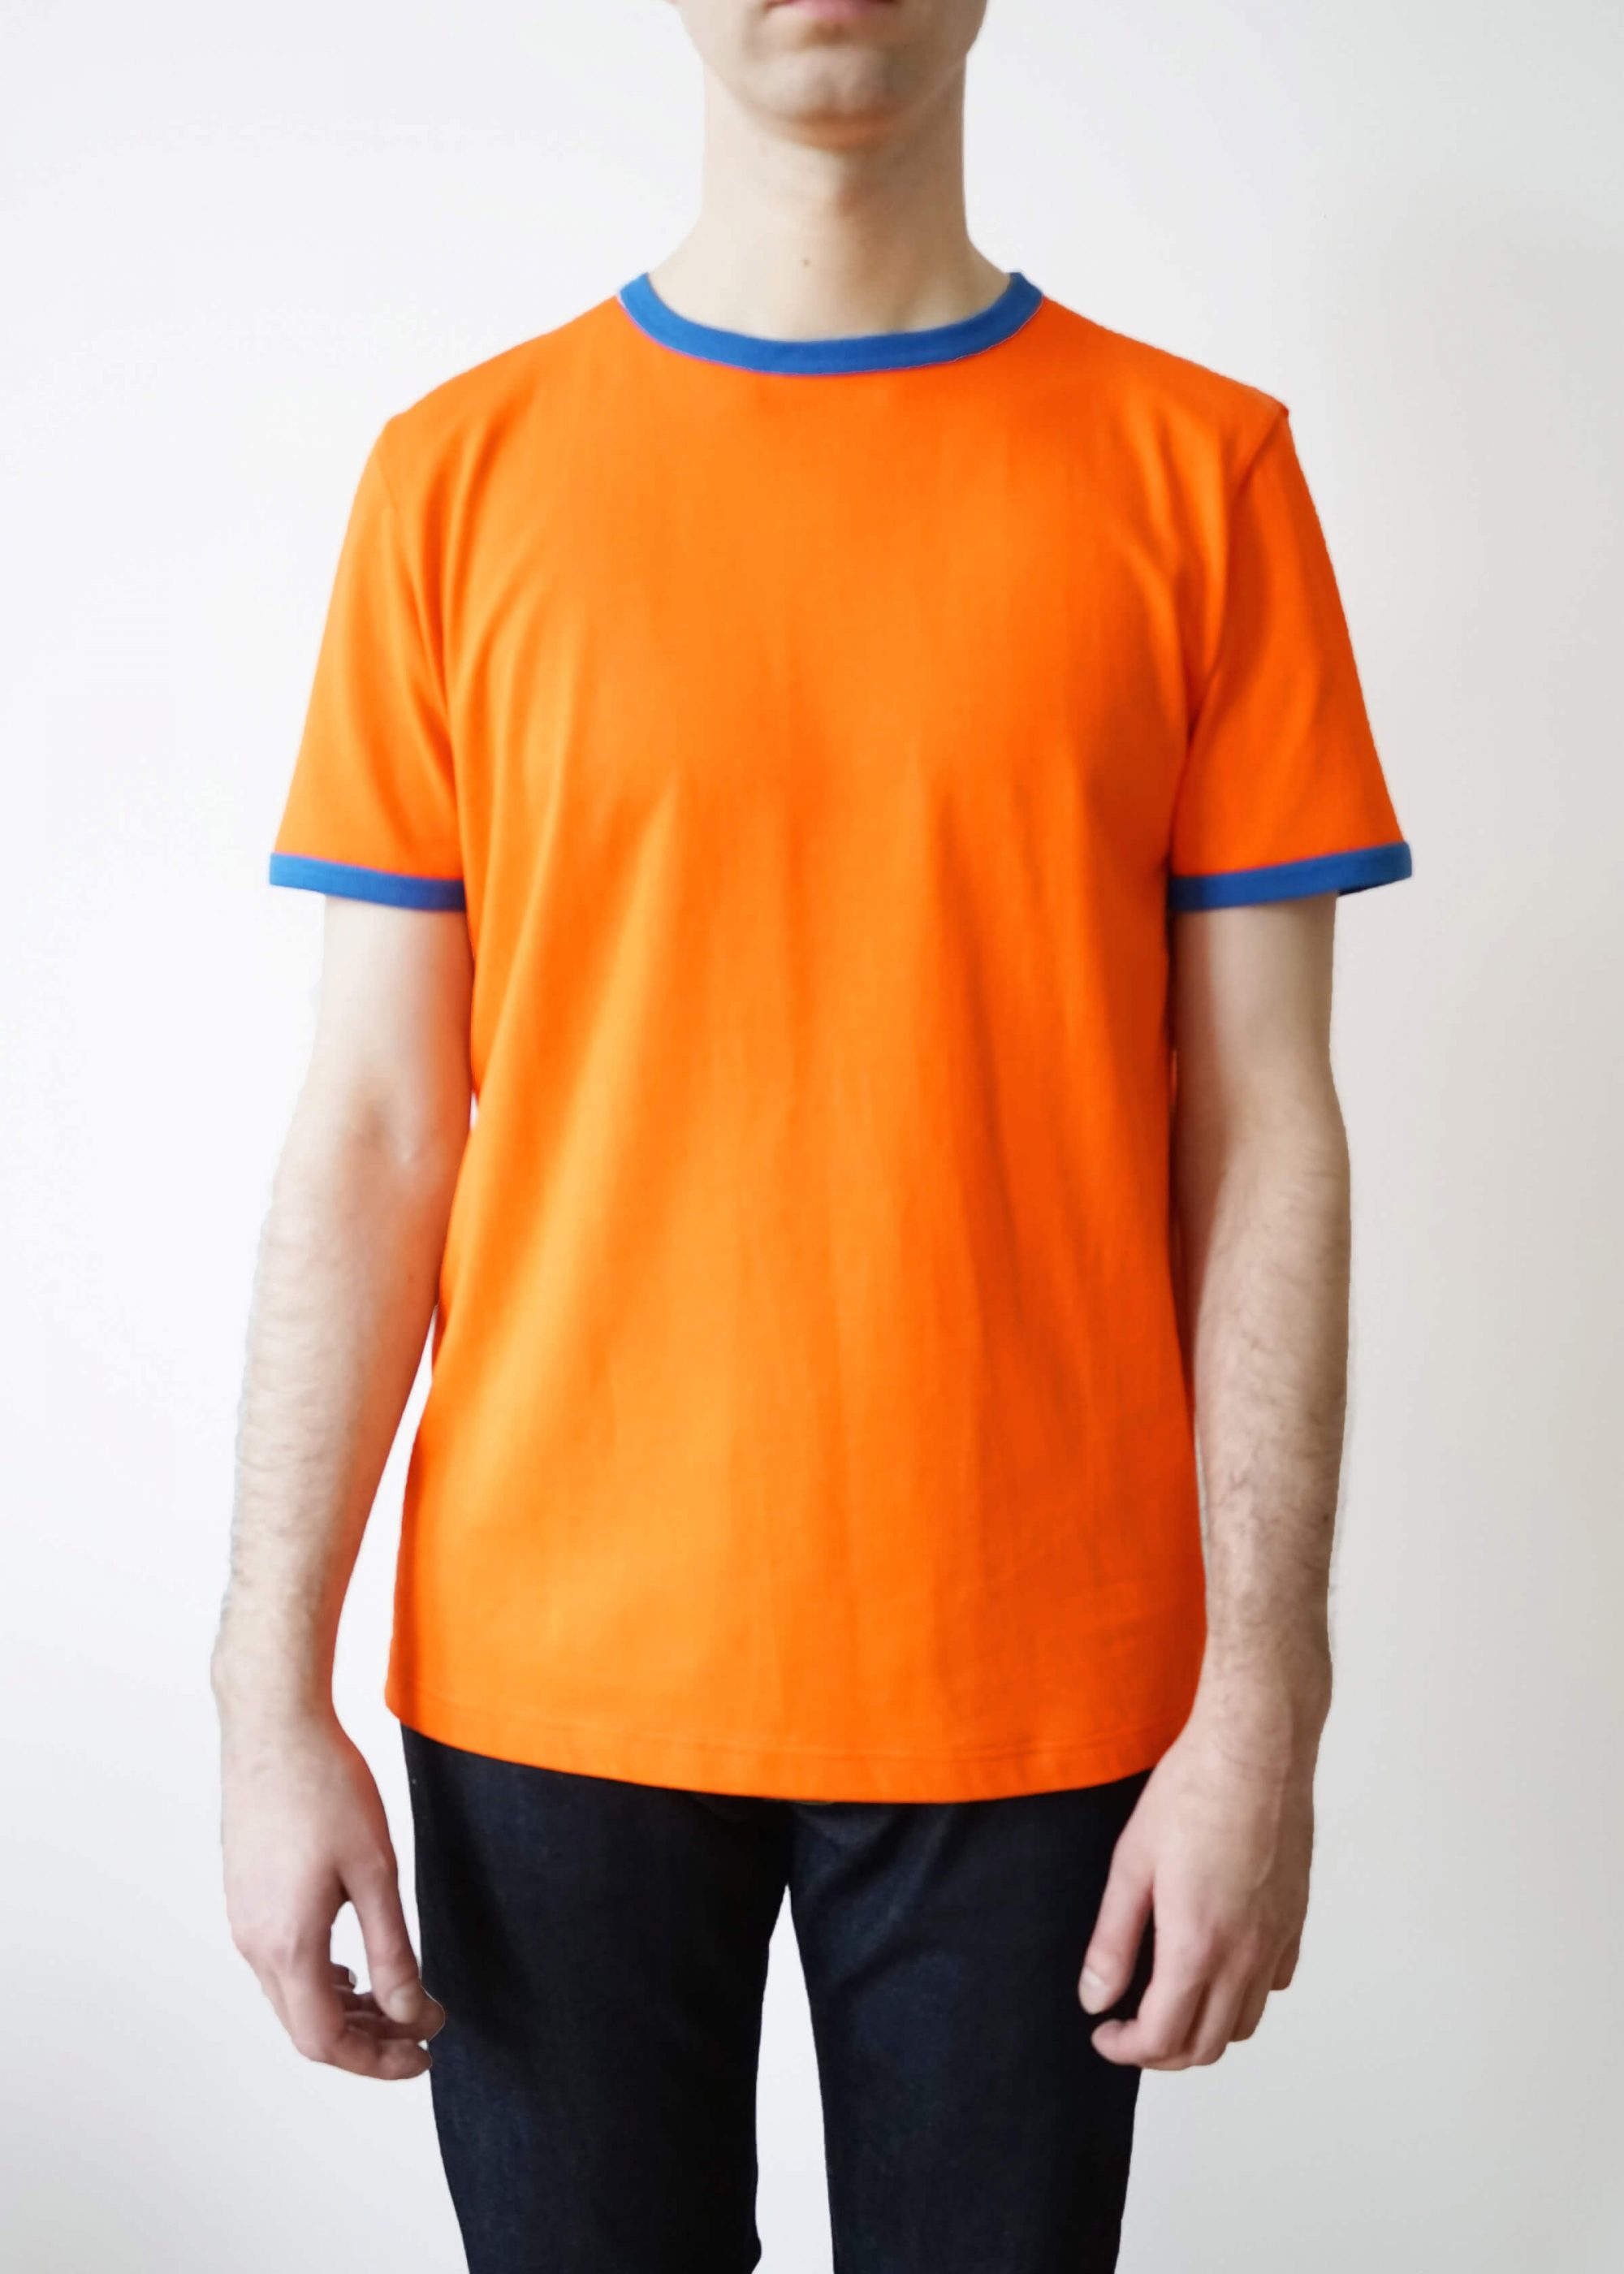 Product image for »Harrison« Orange Blue Ringer T-Shirt 100% Organic Cotton